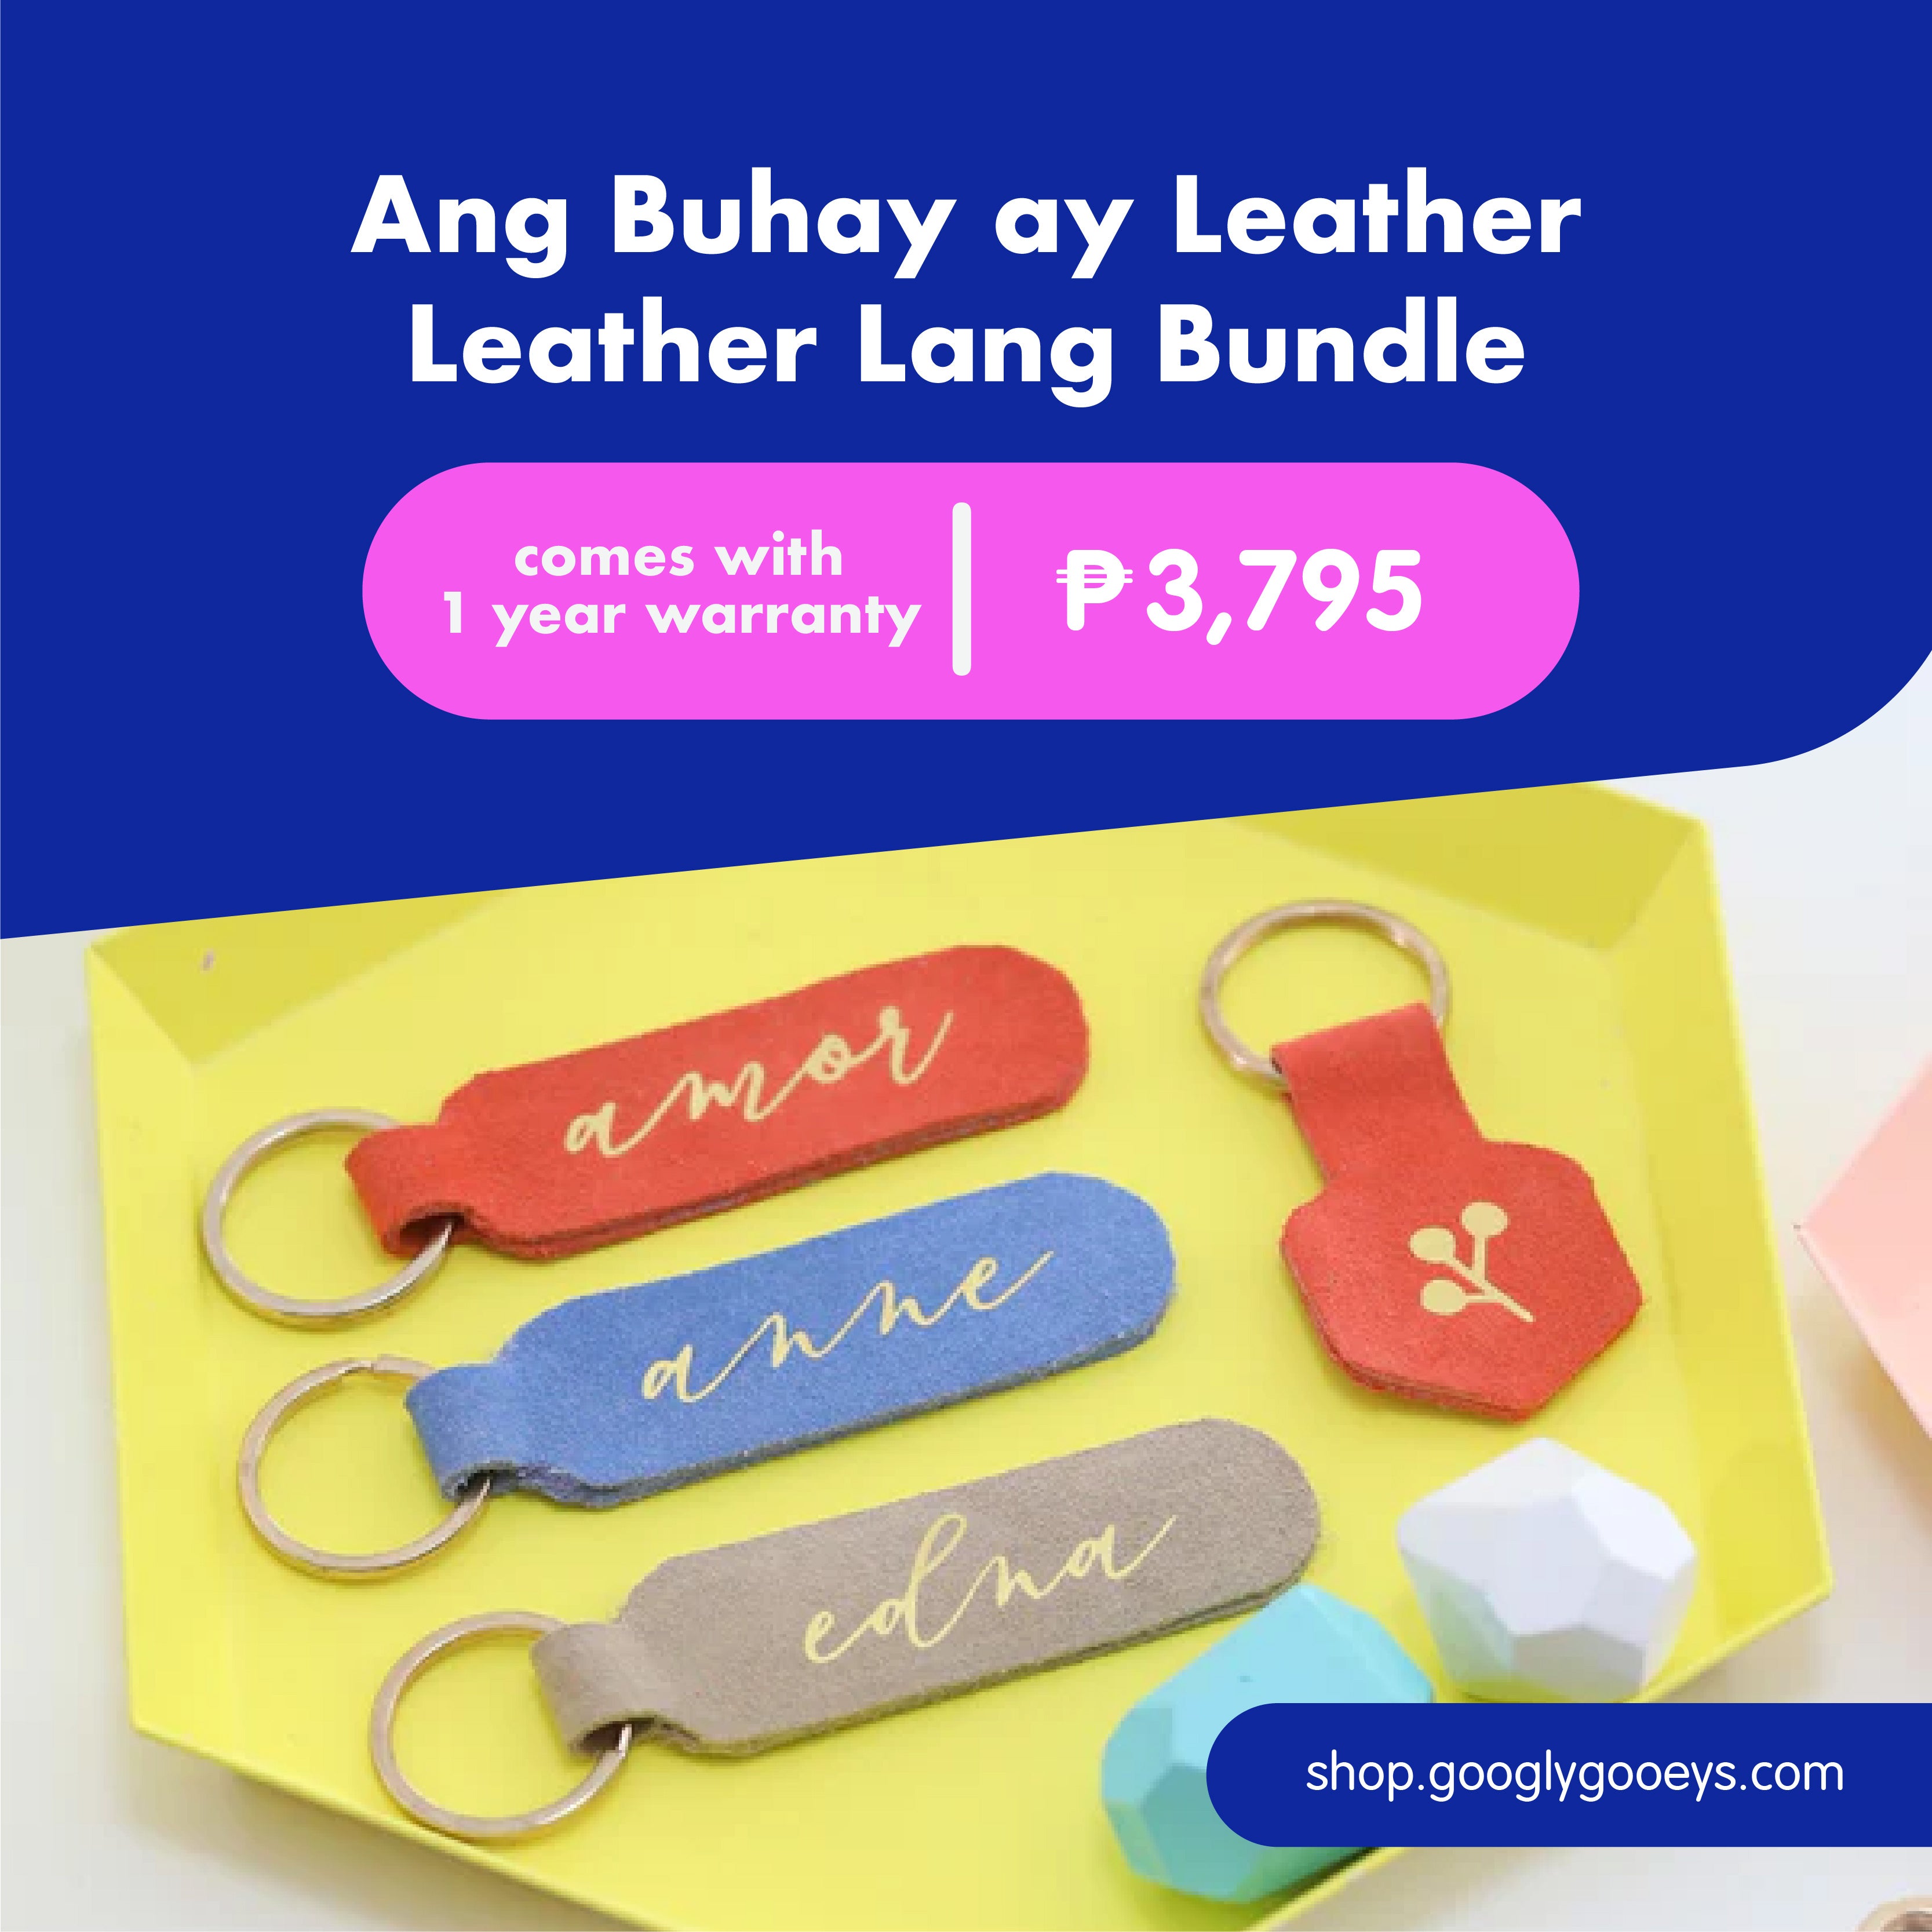 Ang Buhay ay Leather Leather Lang Bundle